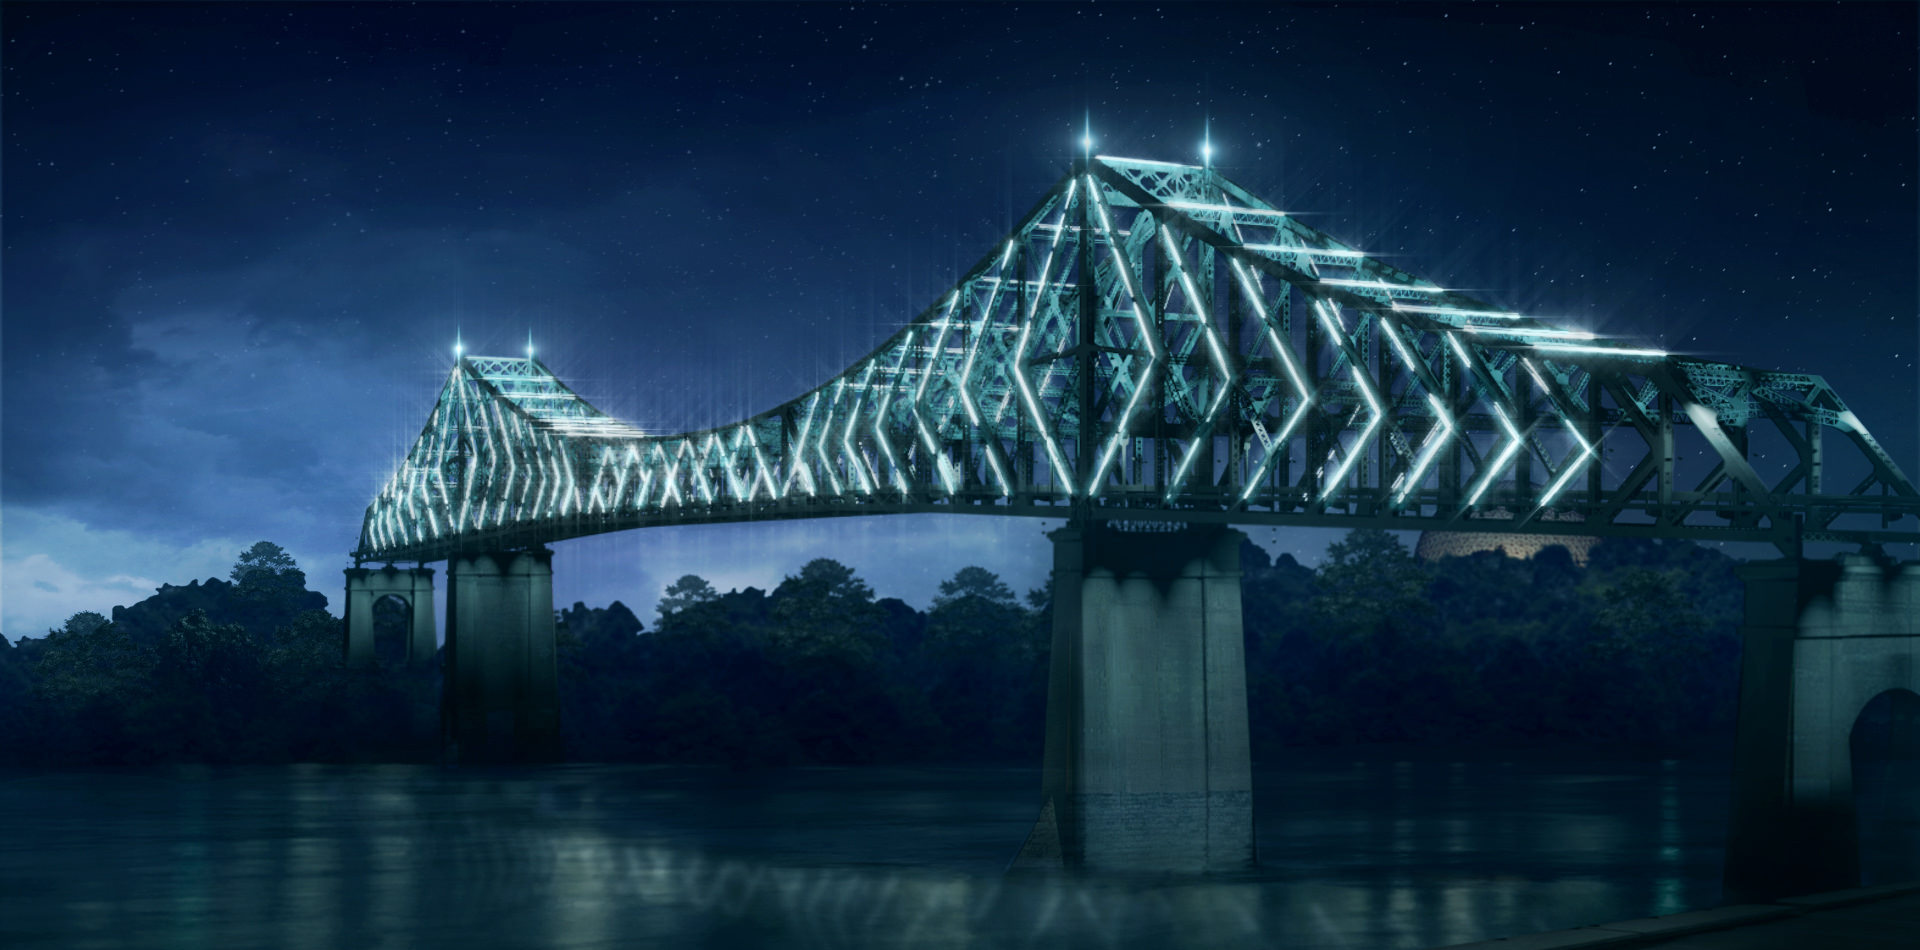 pont jean cartier montreal